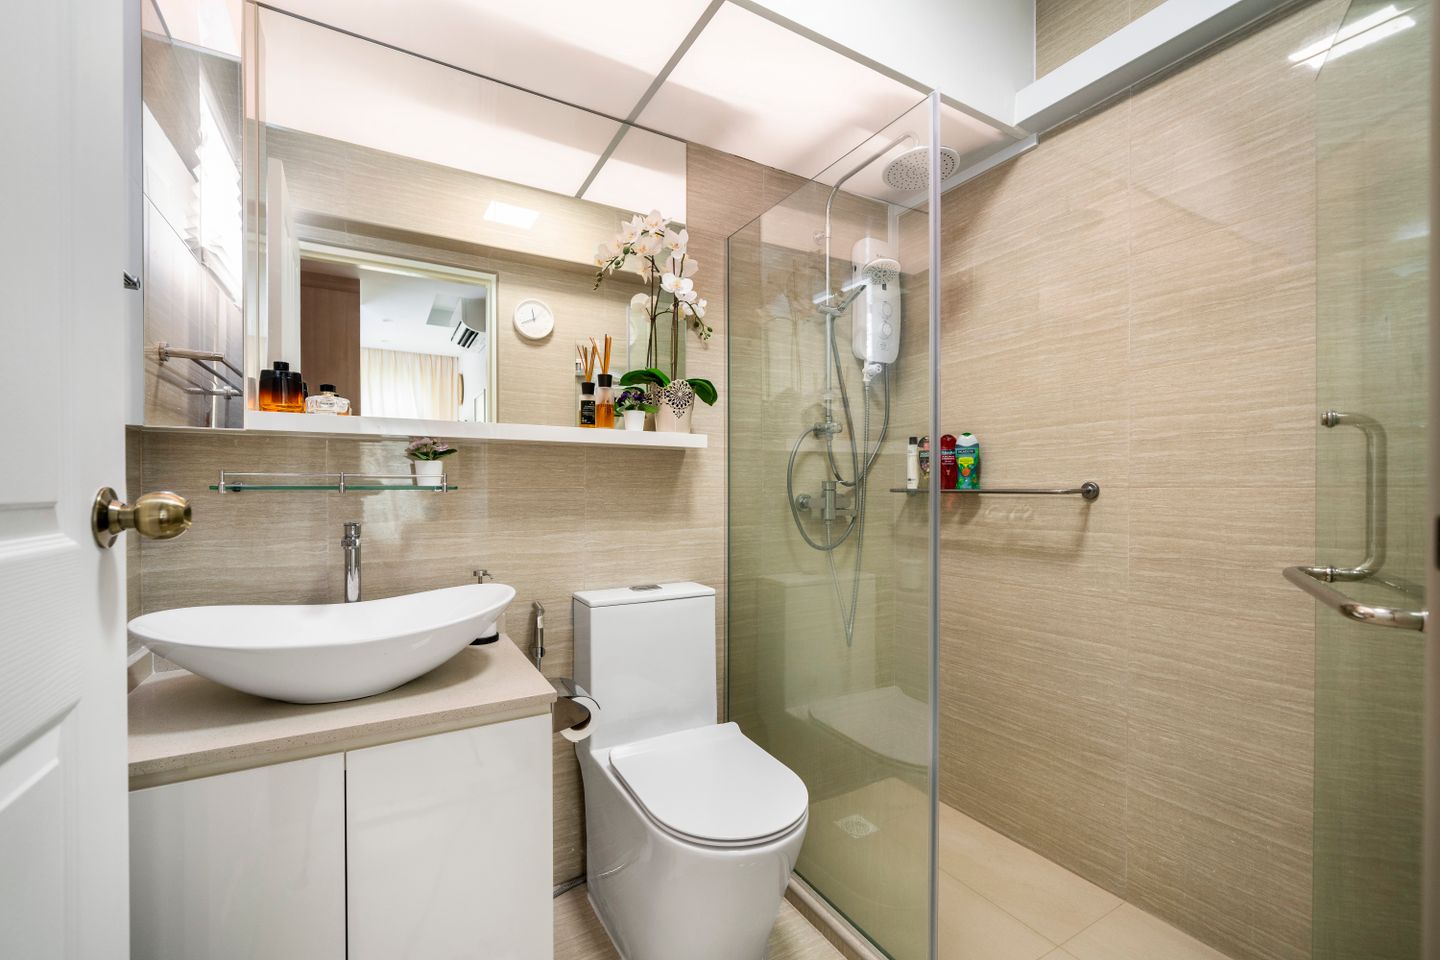 Compact Bathroom With A Contemporary Design - Livspace